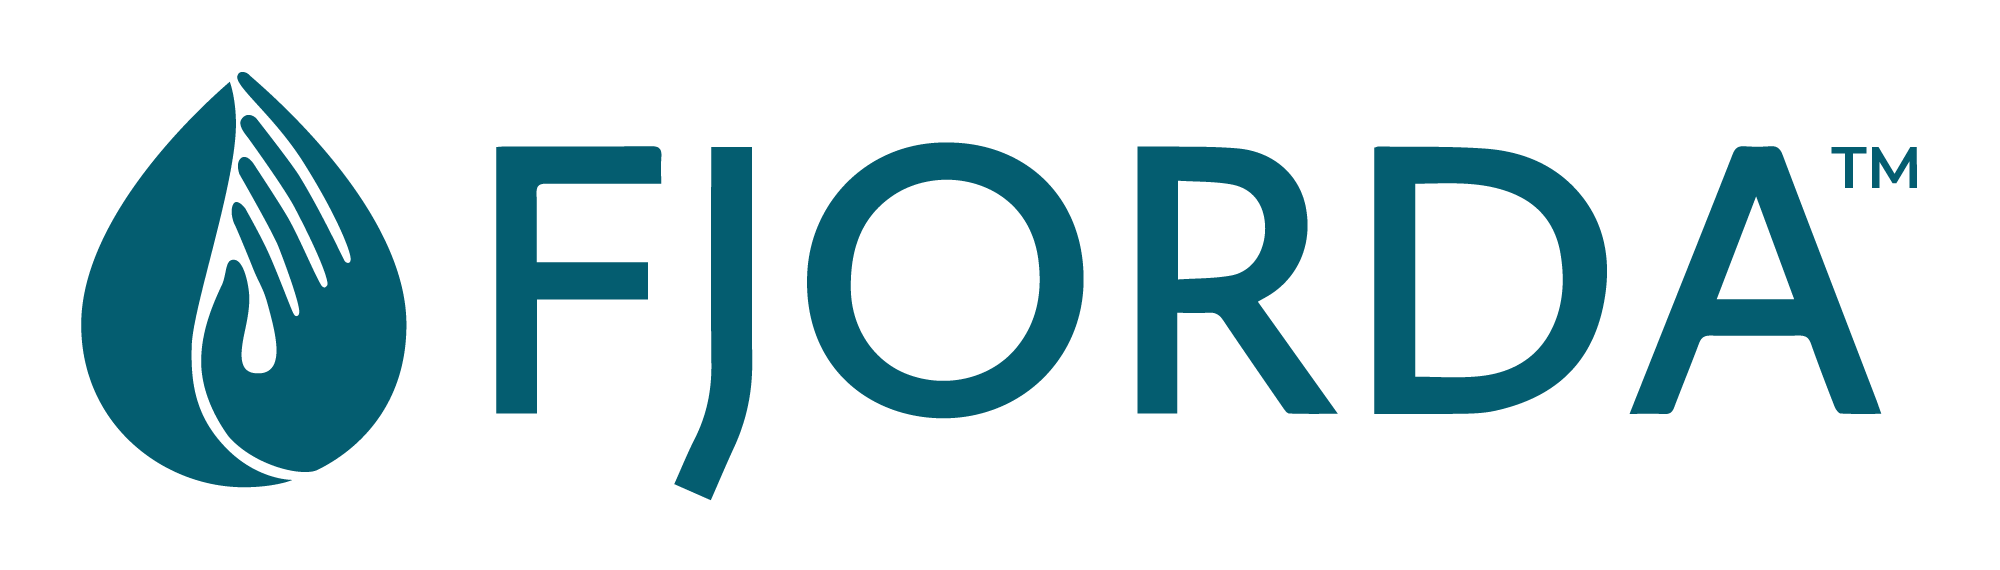 fjorda-logo-color-transparent (1)